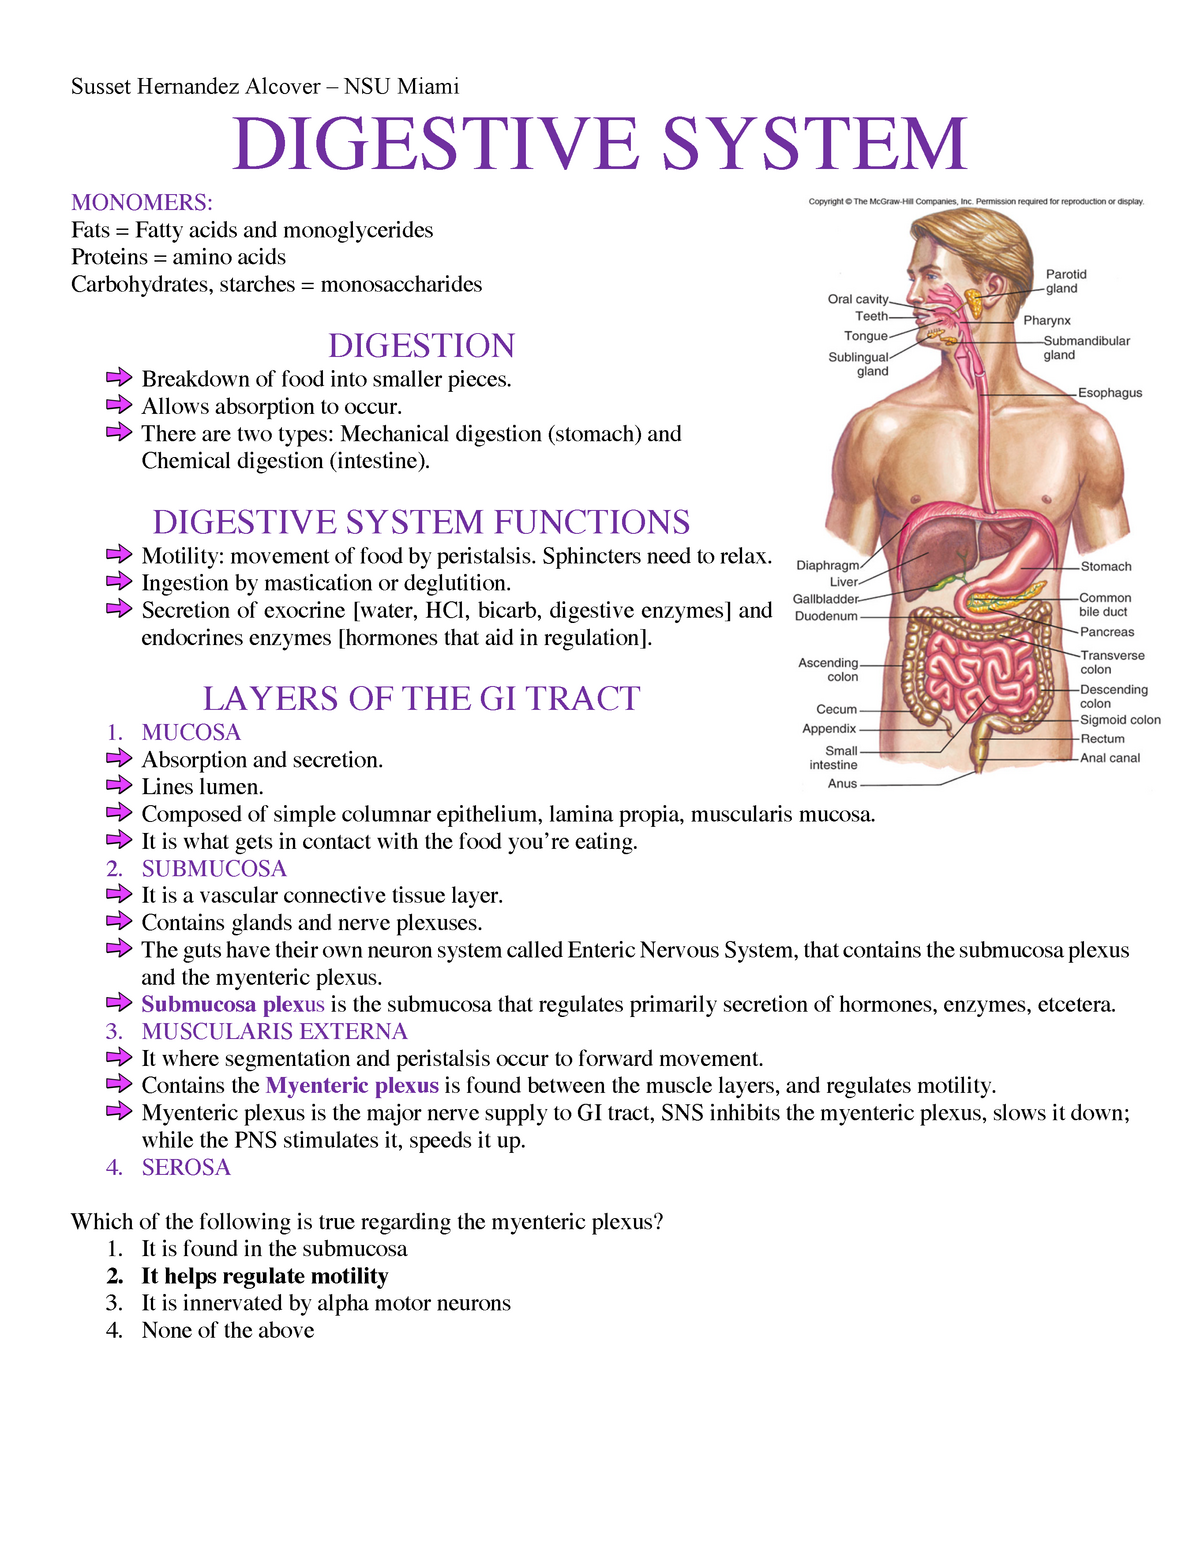 write an essay regarding the digestive organs of the body